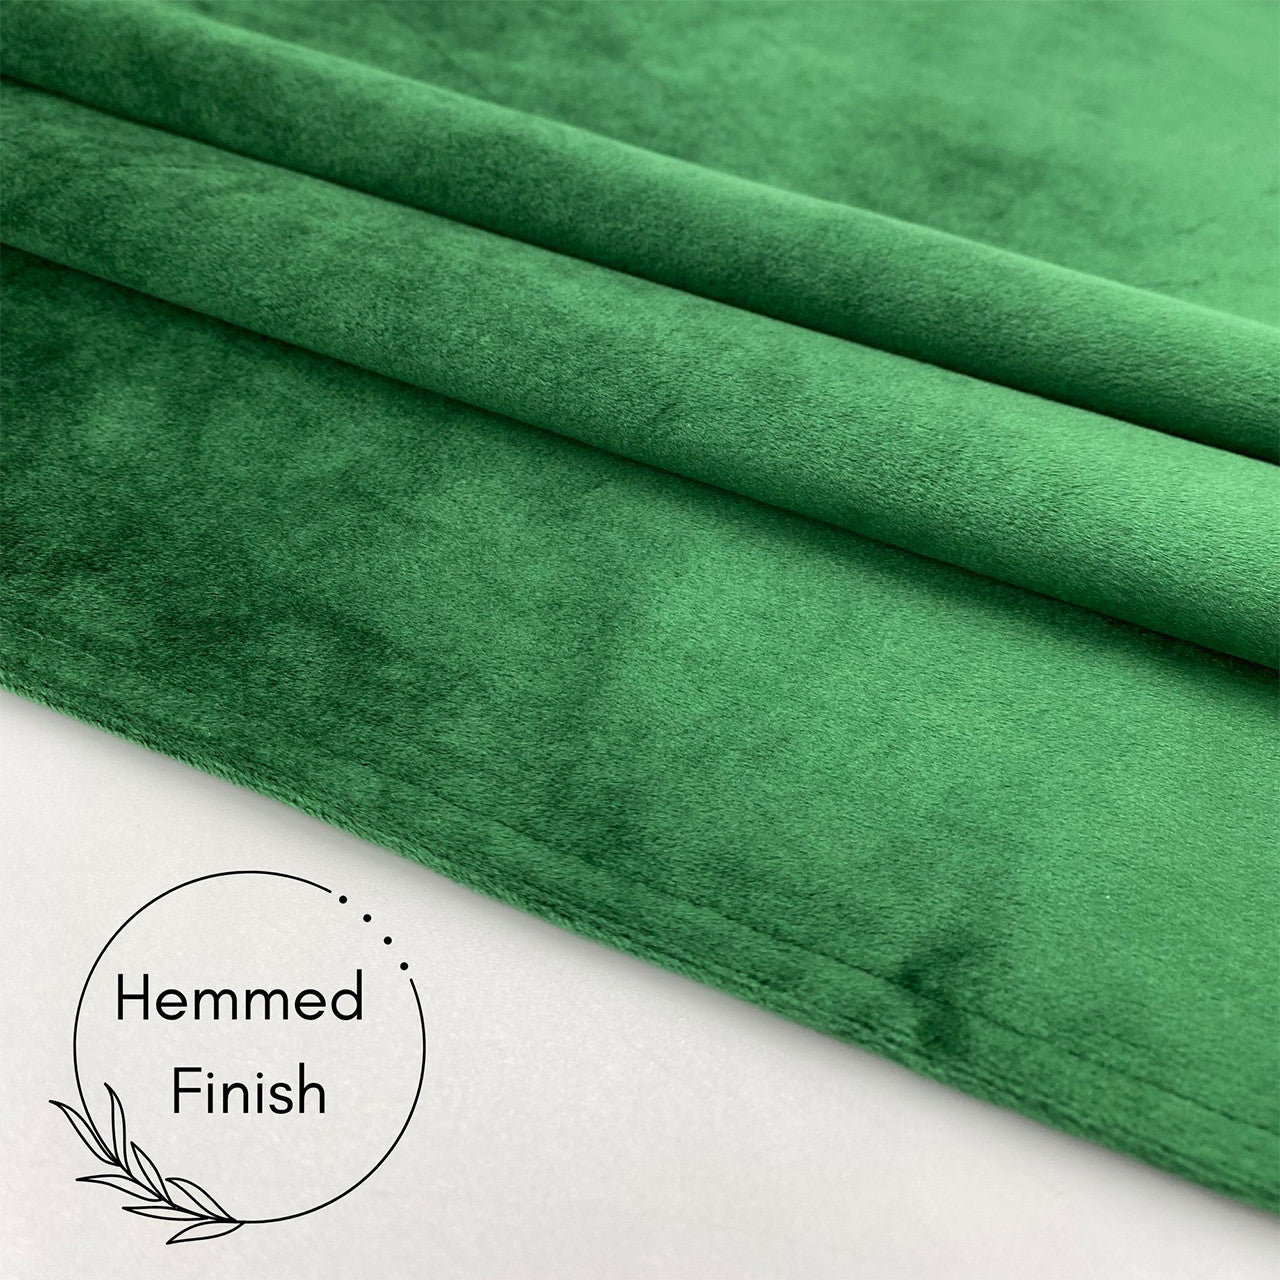 20 Inch Royal Velvet Cloth Napkins Emerald Green (Pack of 10)